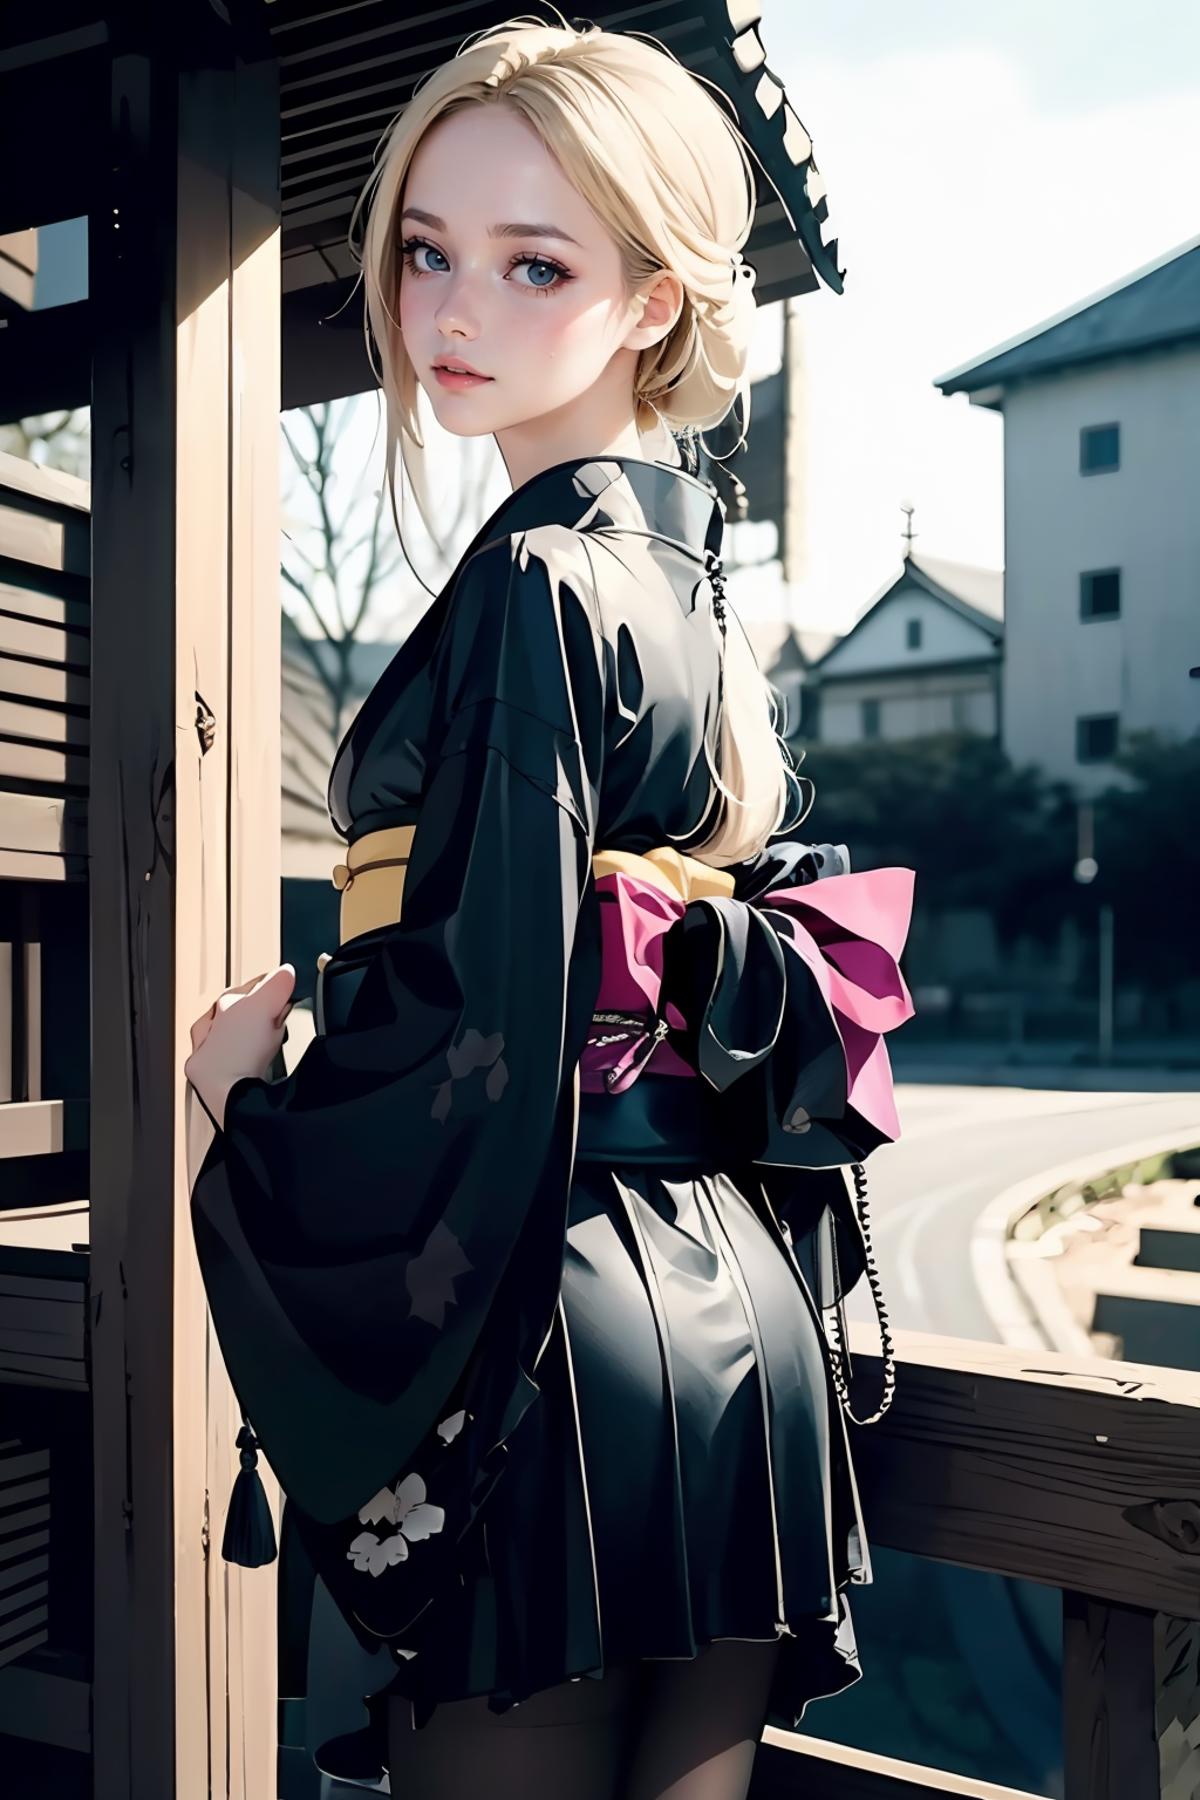 Gothic Kimono image by rhult